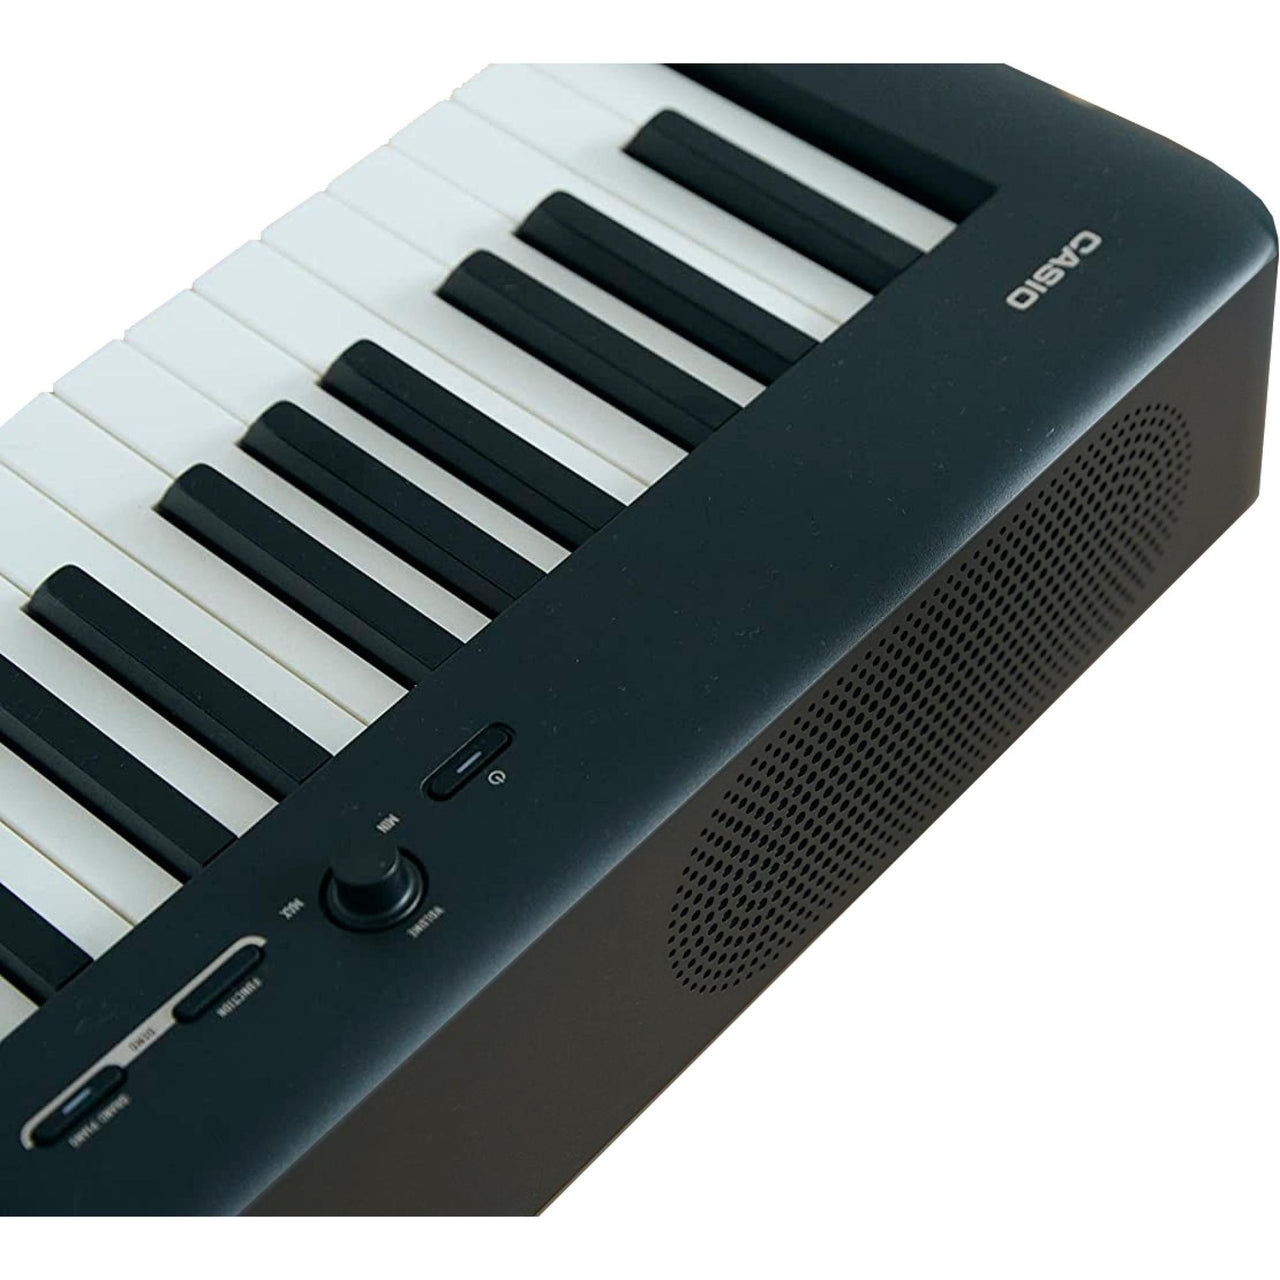 Piano Casio Cdp-s110bk Digital 88 Teclas